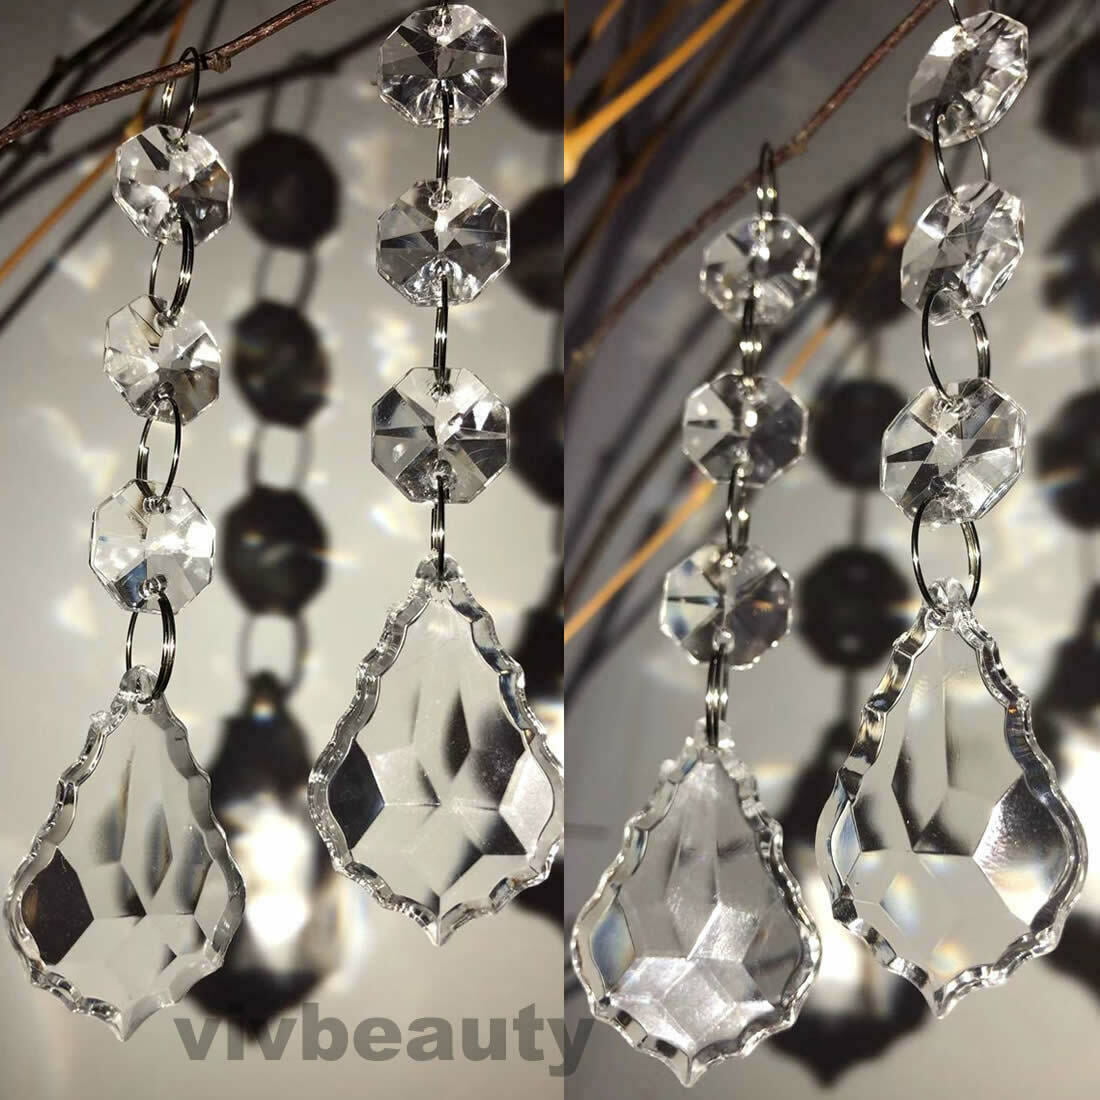 10 X Wedding Crystal Prism Pendant Strands Diamond Bead Chandelier Hanging Decor 